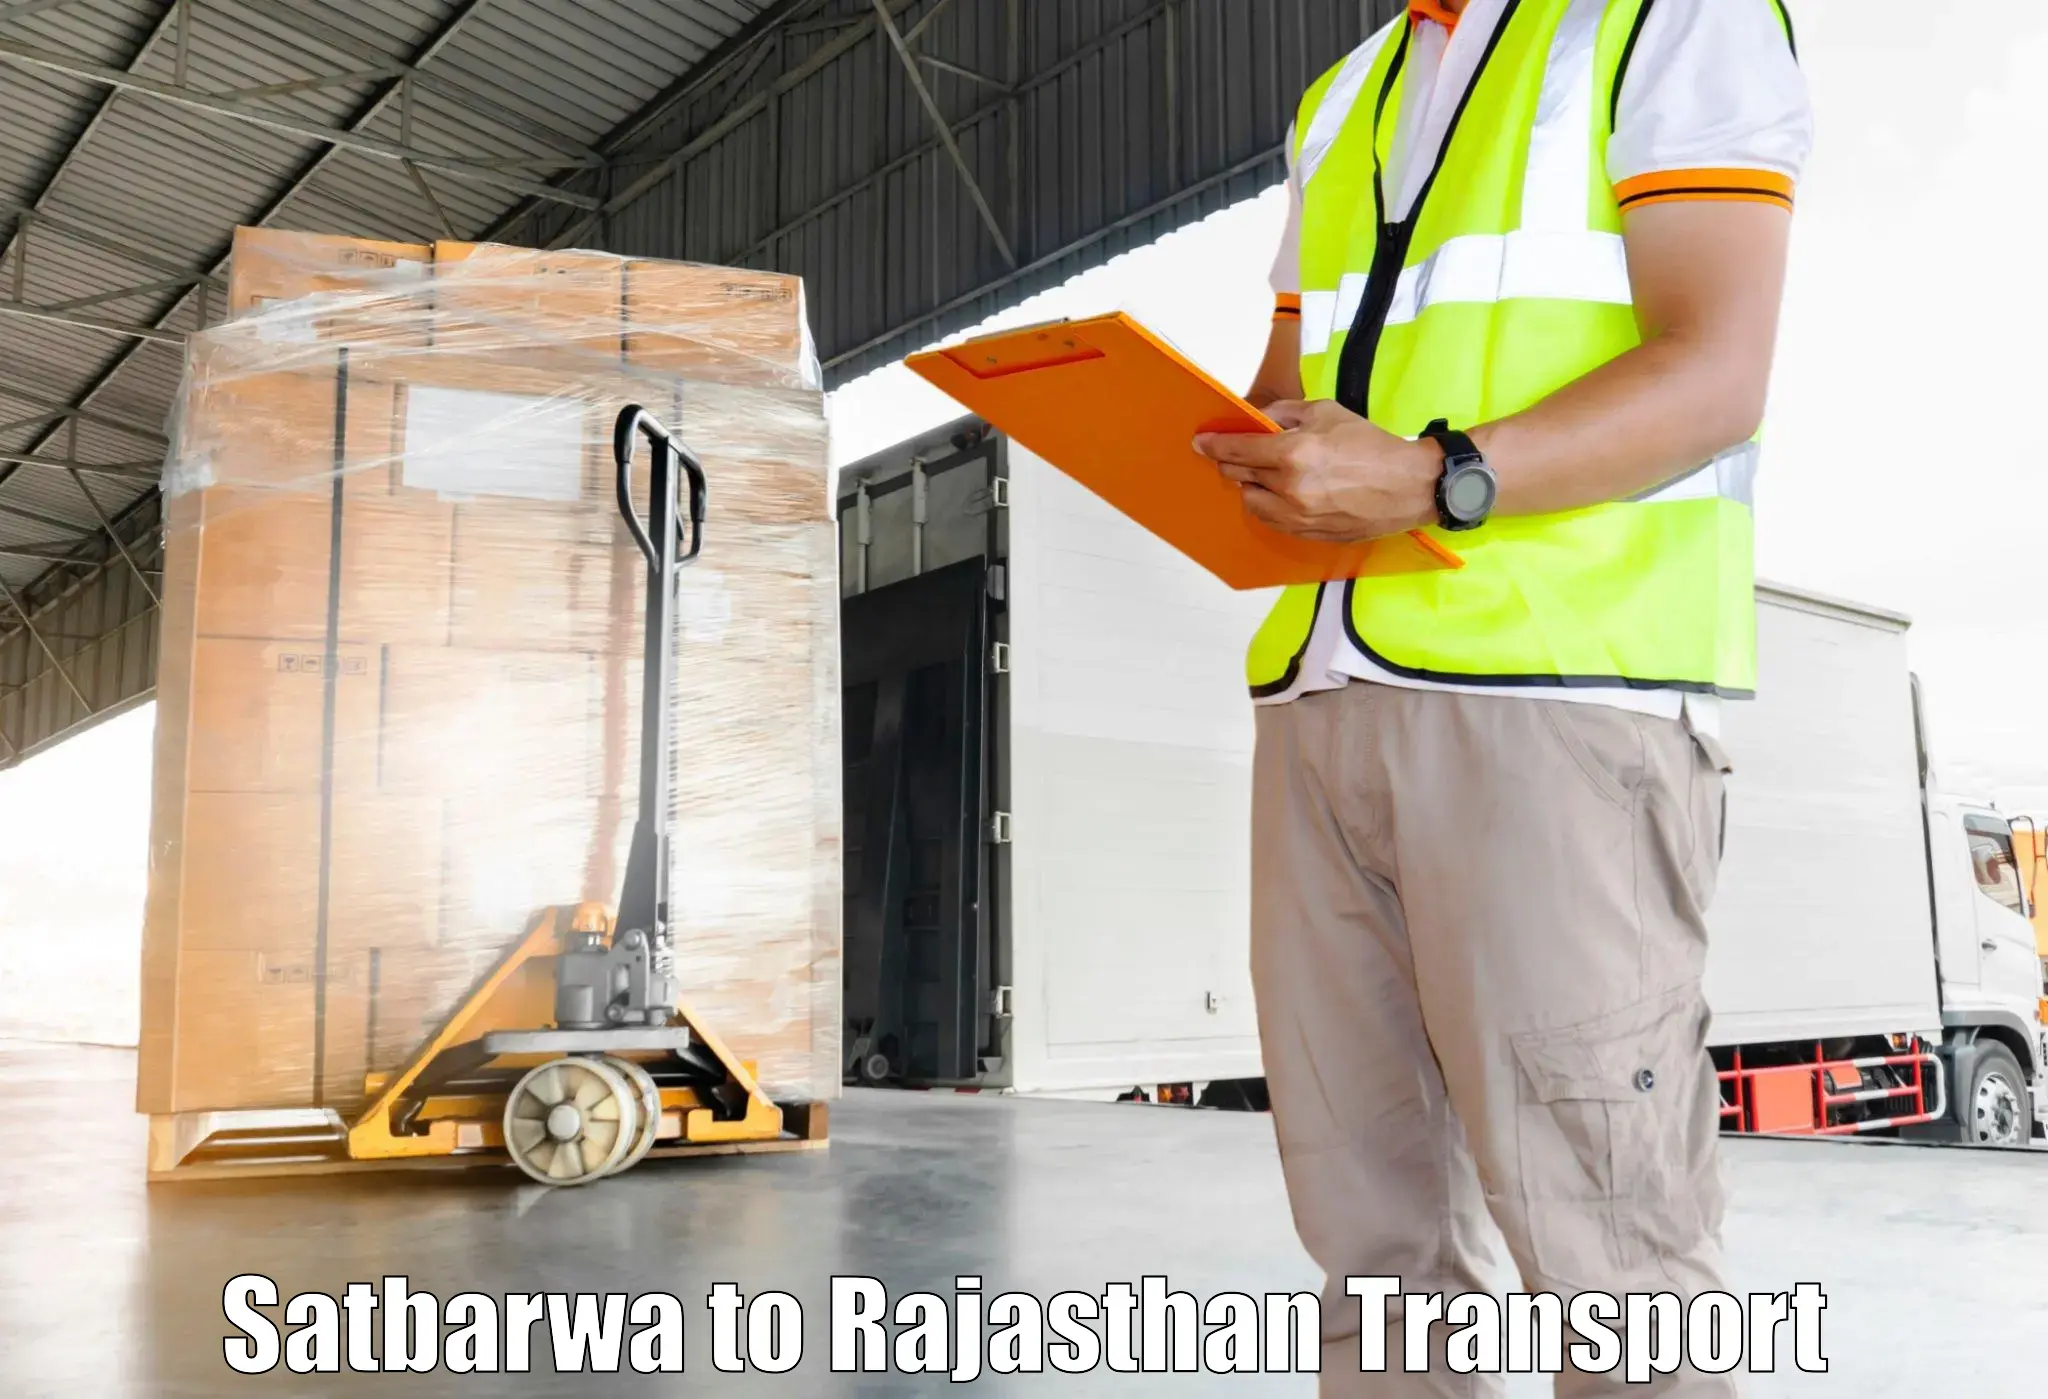 Vehicle transport services in Satbarwa to Weir